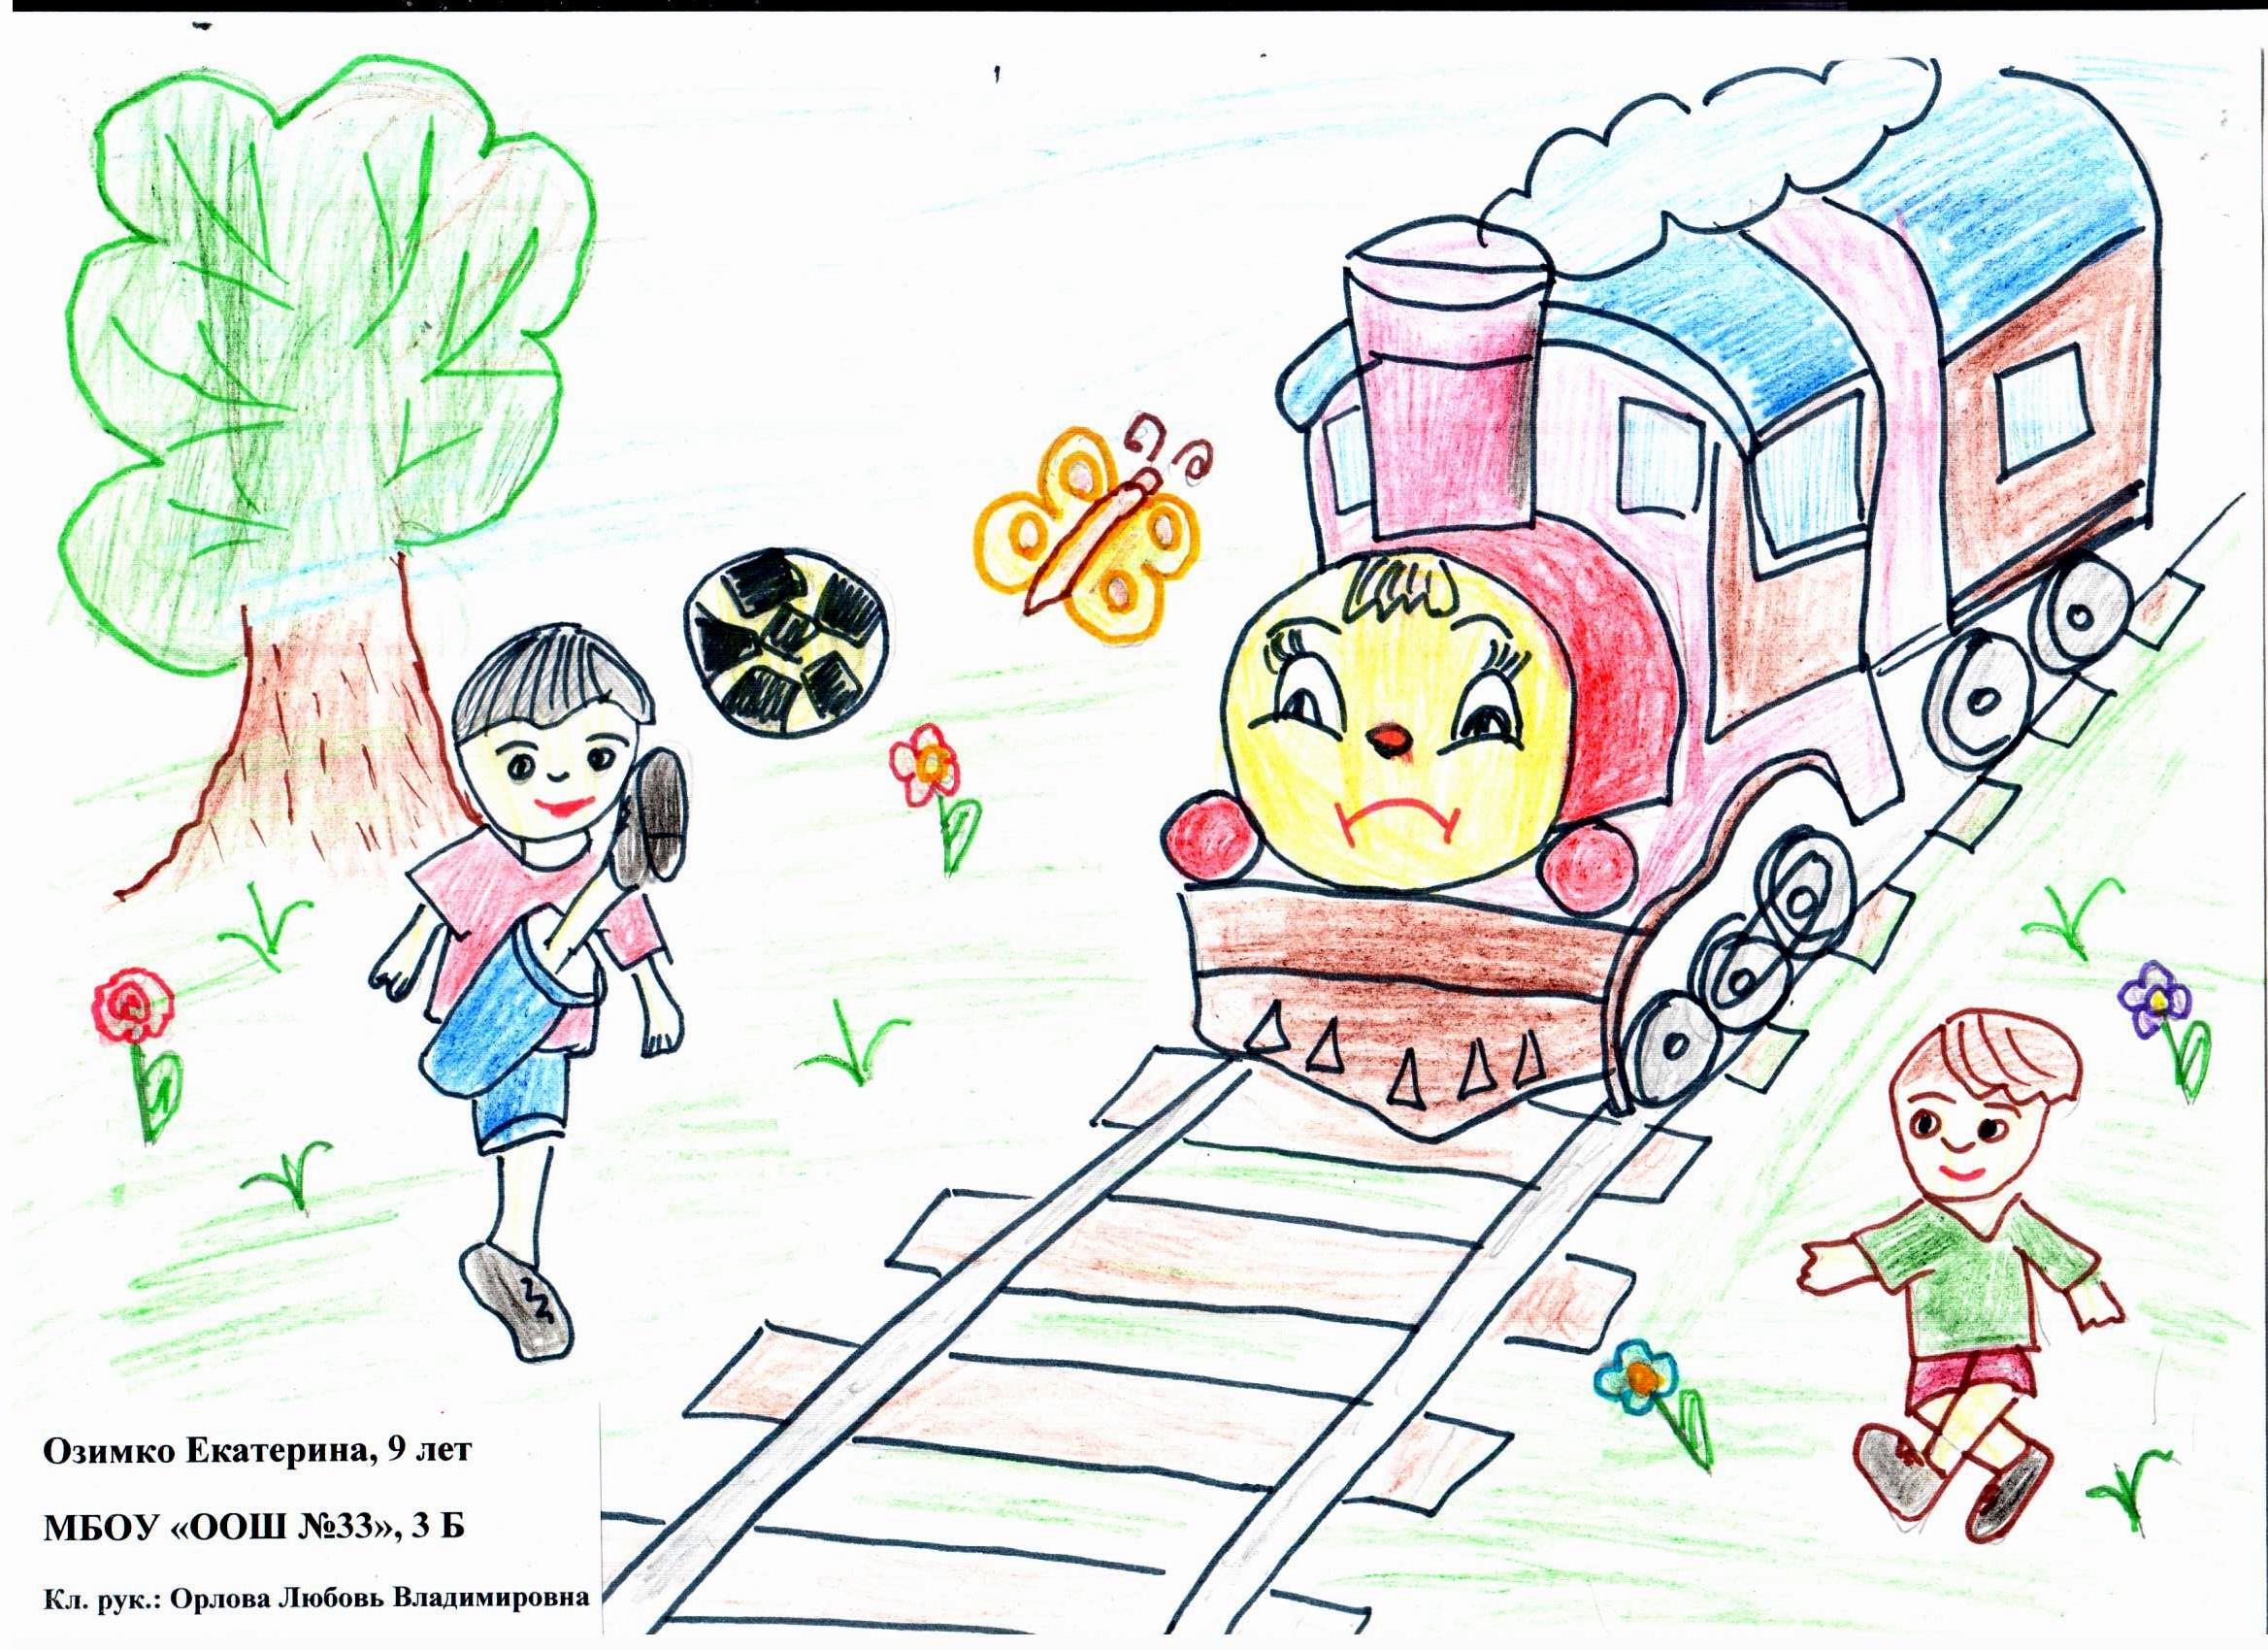 Нарисовать железную дорогу 1 класс. Железная дорога рисунок. Детская железная дорога рисунок. Безопасность на железной дороге. Безопасность на железной дороге рисунки.